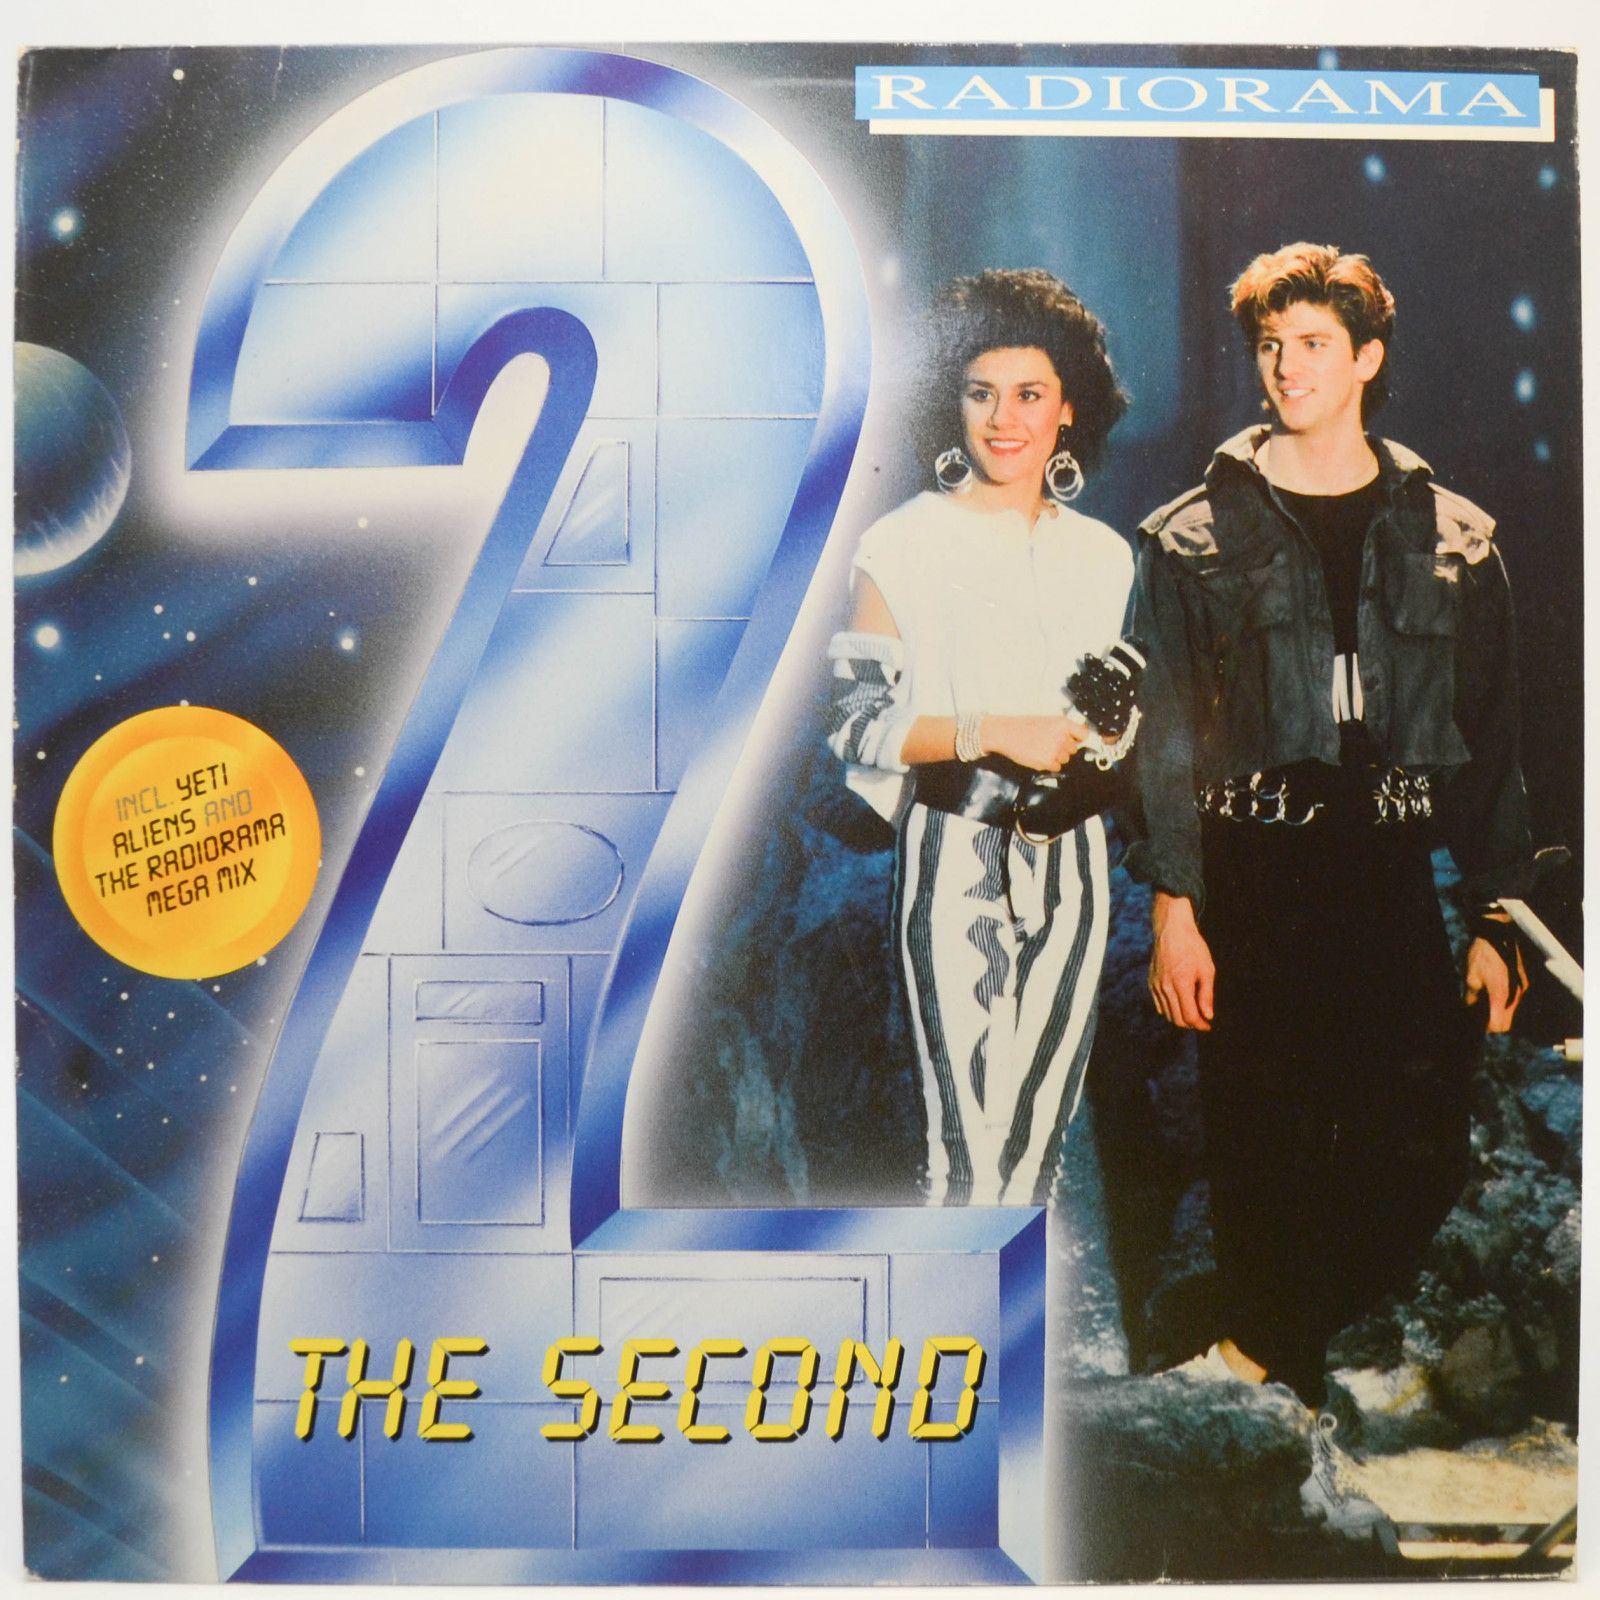 Radiorama — The Second, 1987